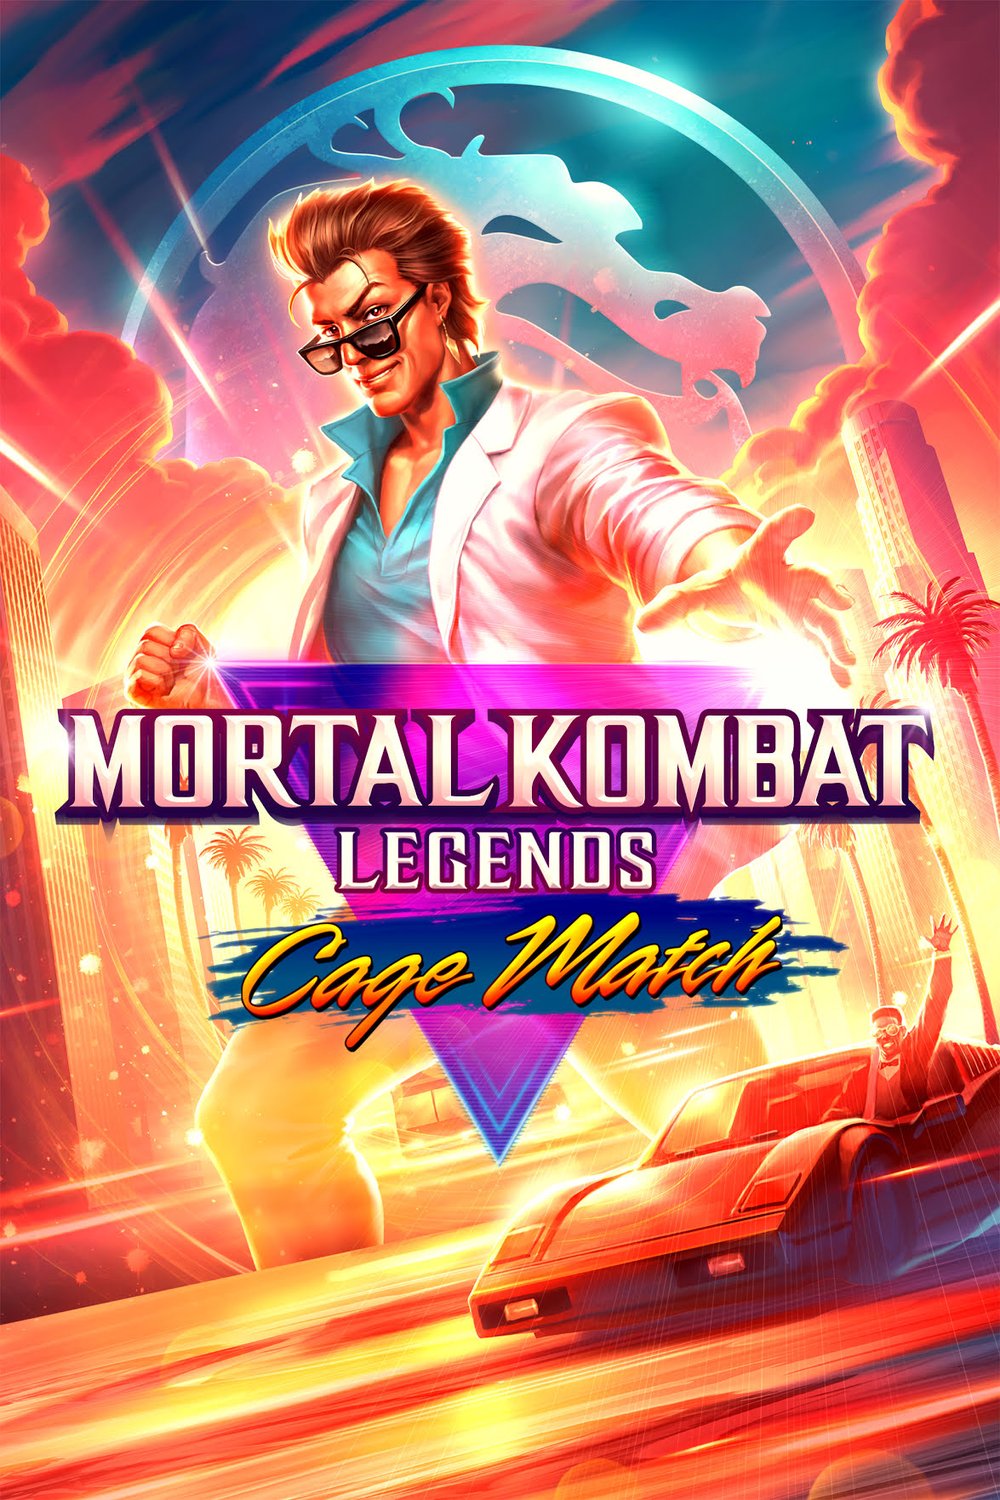 L'affiche du film Mortal Kombat Legends: Cage Match